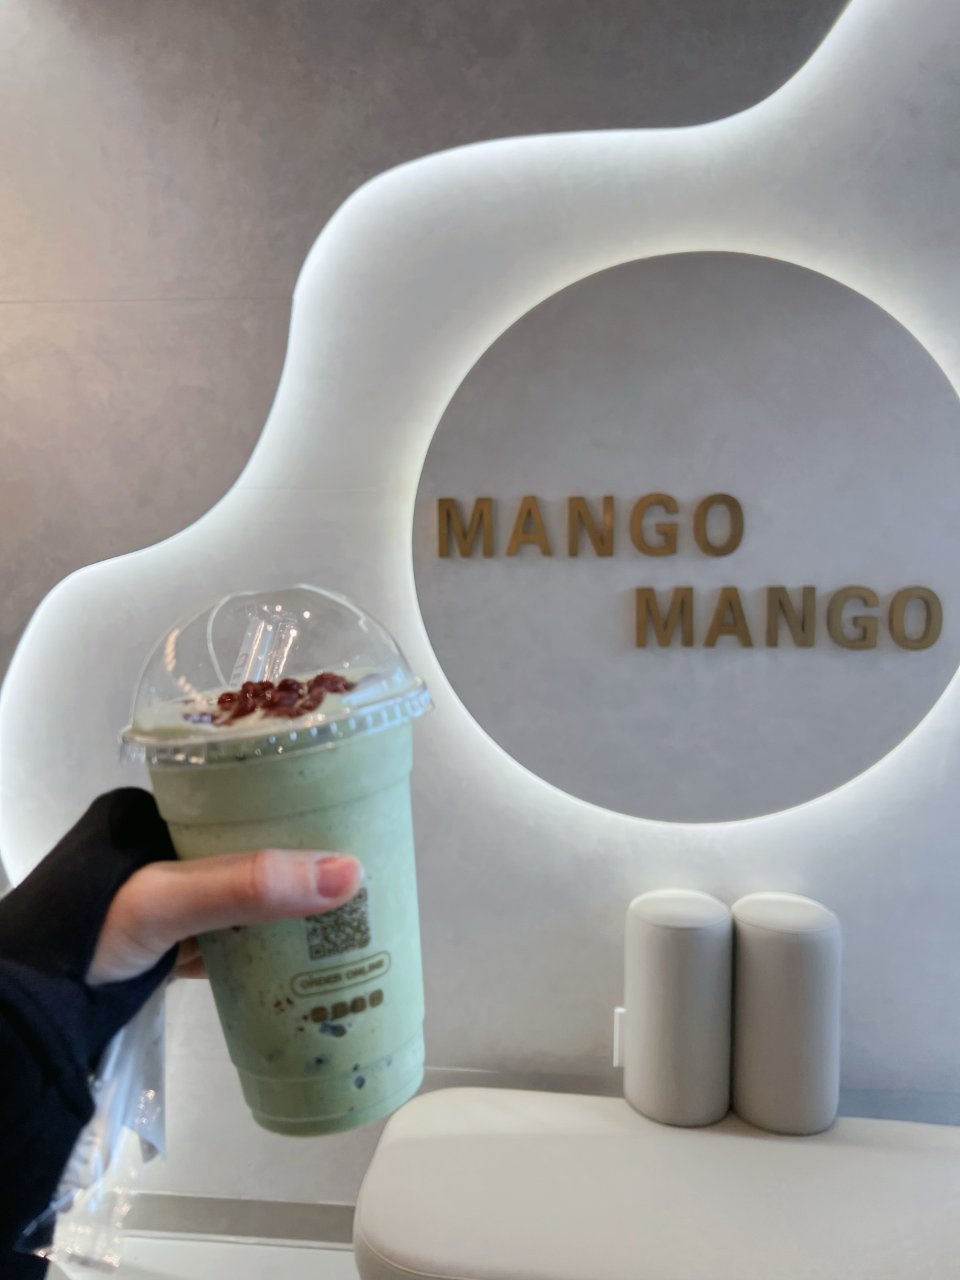 Edison Mango Mango新店...